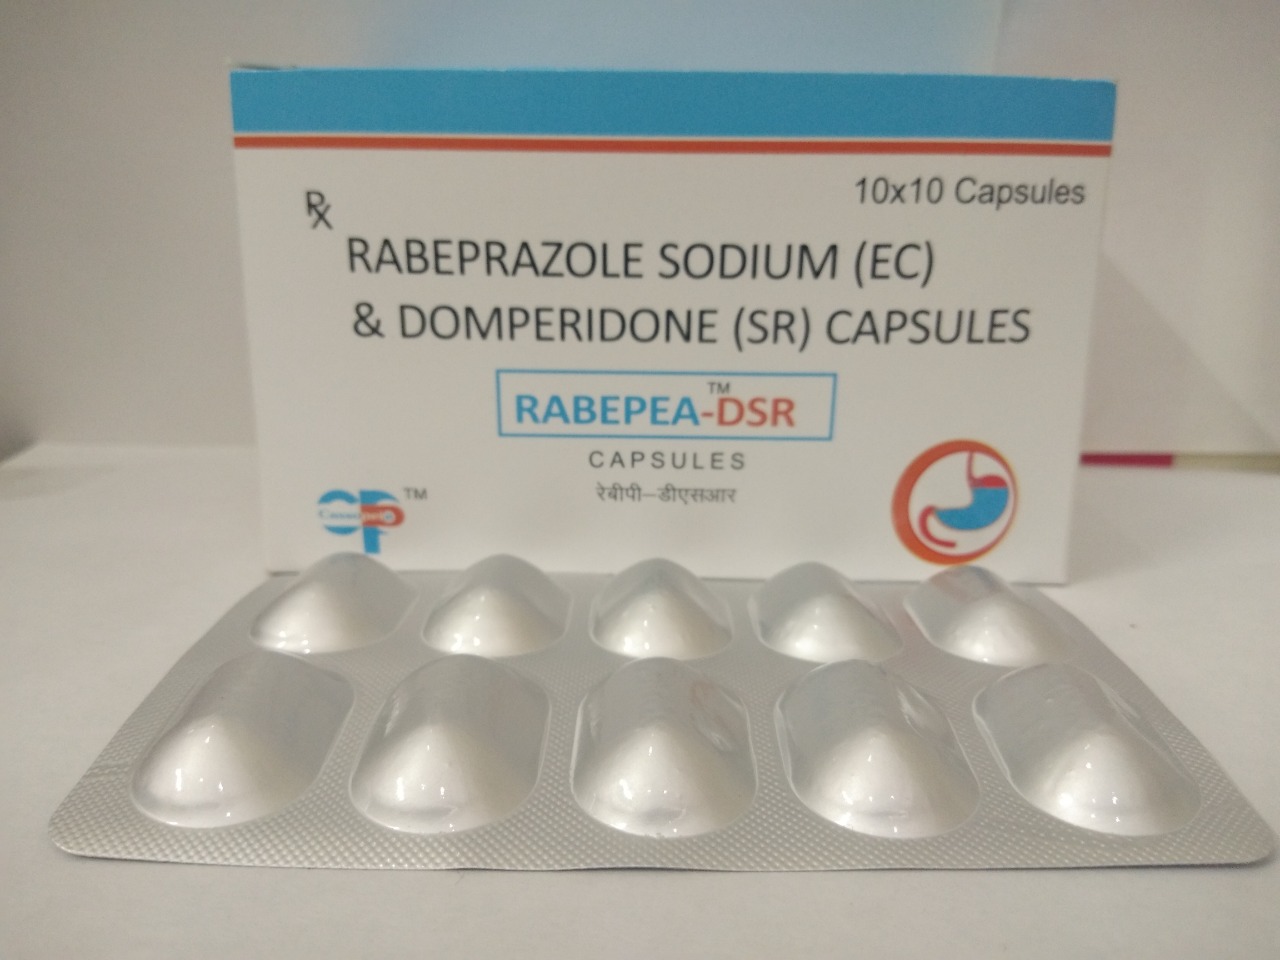 Product Name: Rabepea DSR, Compositions of Rabepea DSR are Rabeprazole Sodium (EC) & Domeperidone (SR) Capsules - Cassopeia Pharmaceutical Pvt Ltd